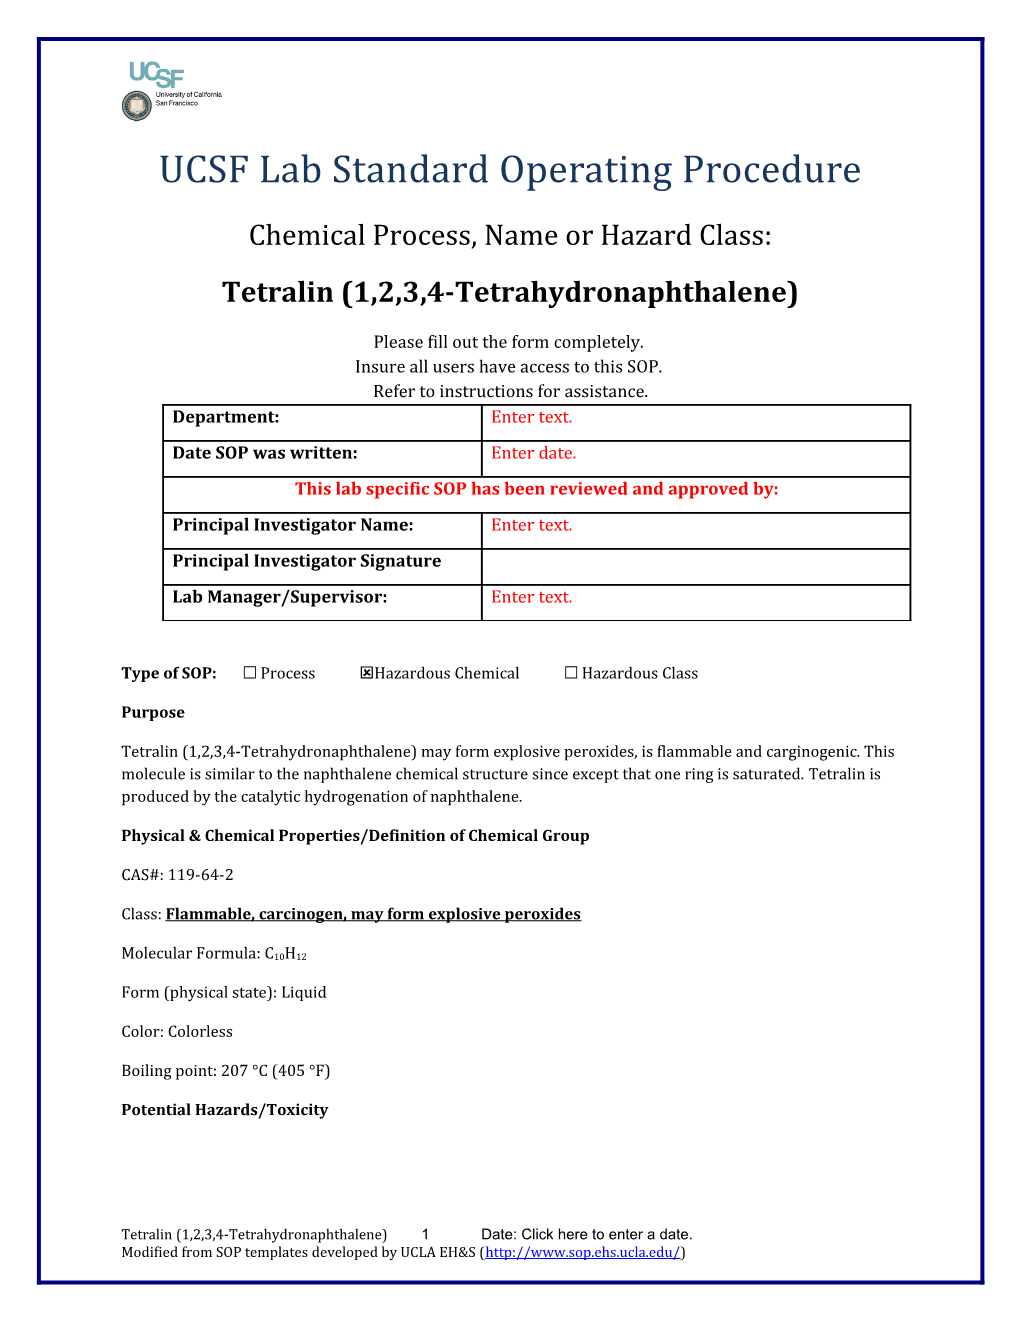 UCSF Lab Standard Operating Procedure s5